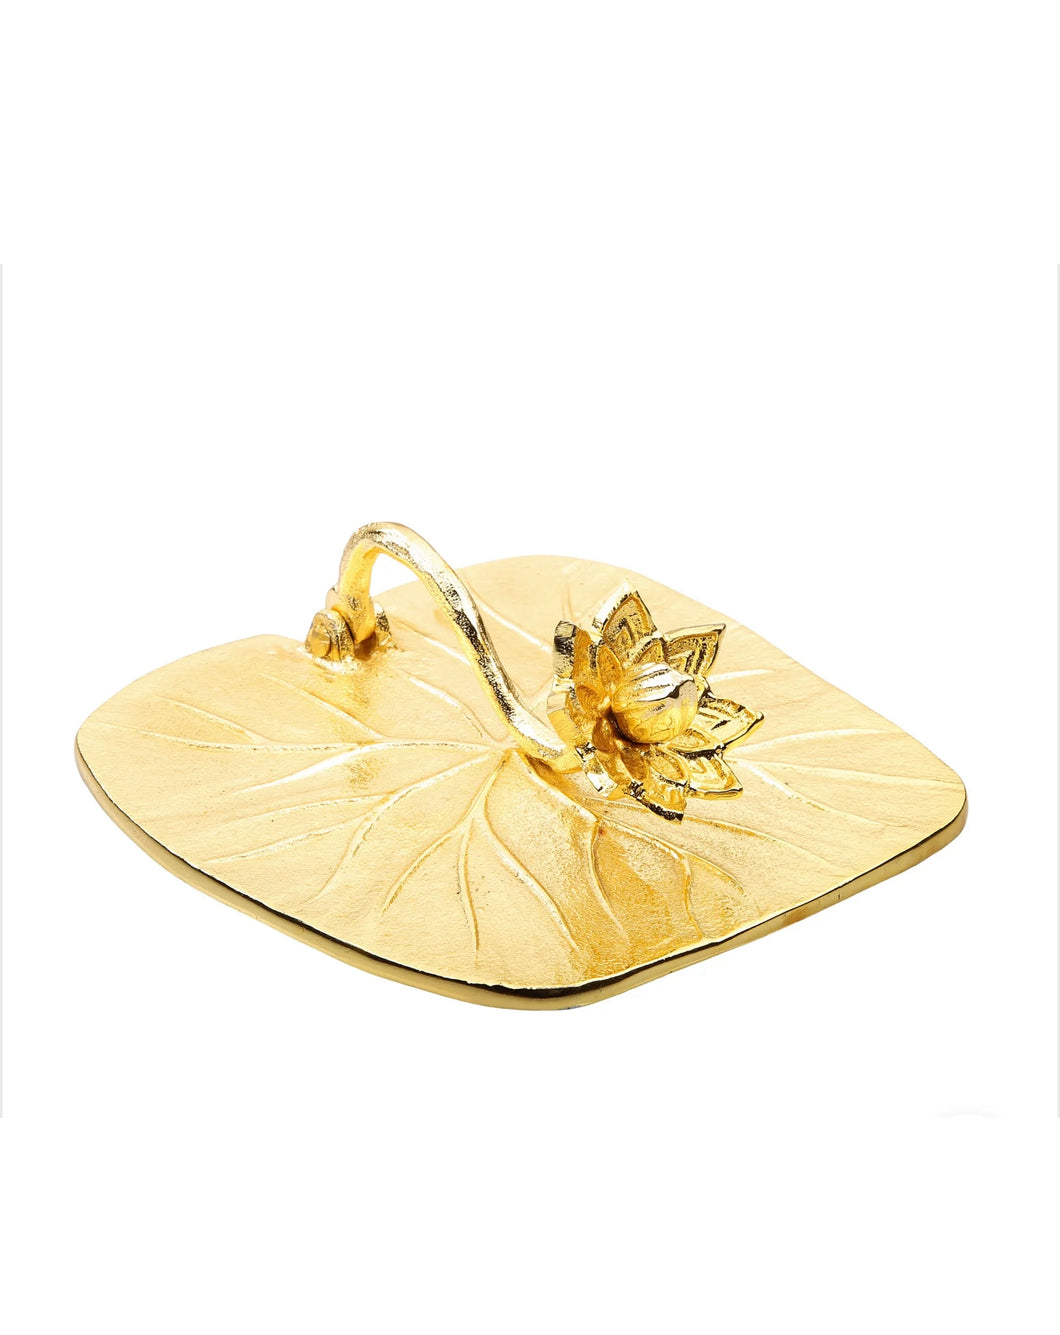 Gold Square Napkin Holder With Lotus Flower Design